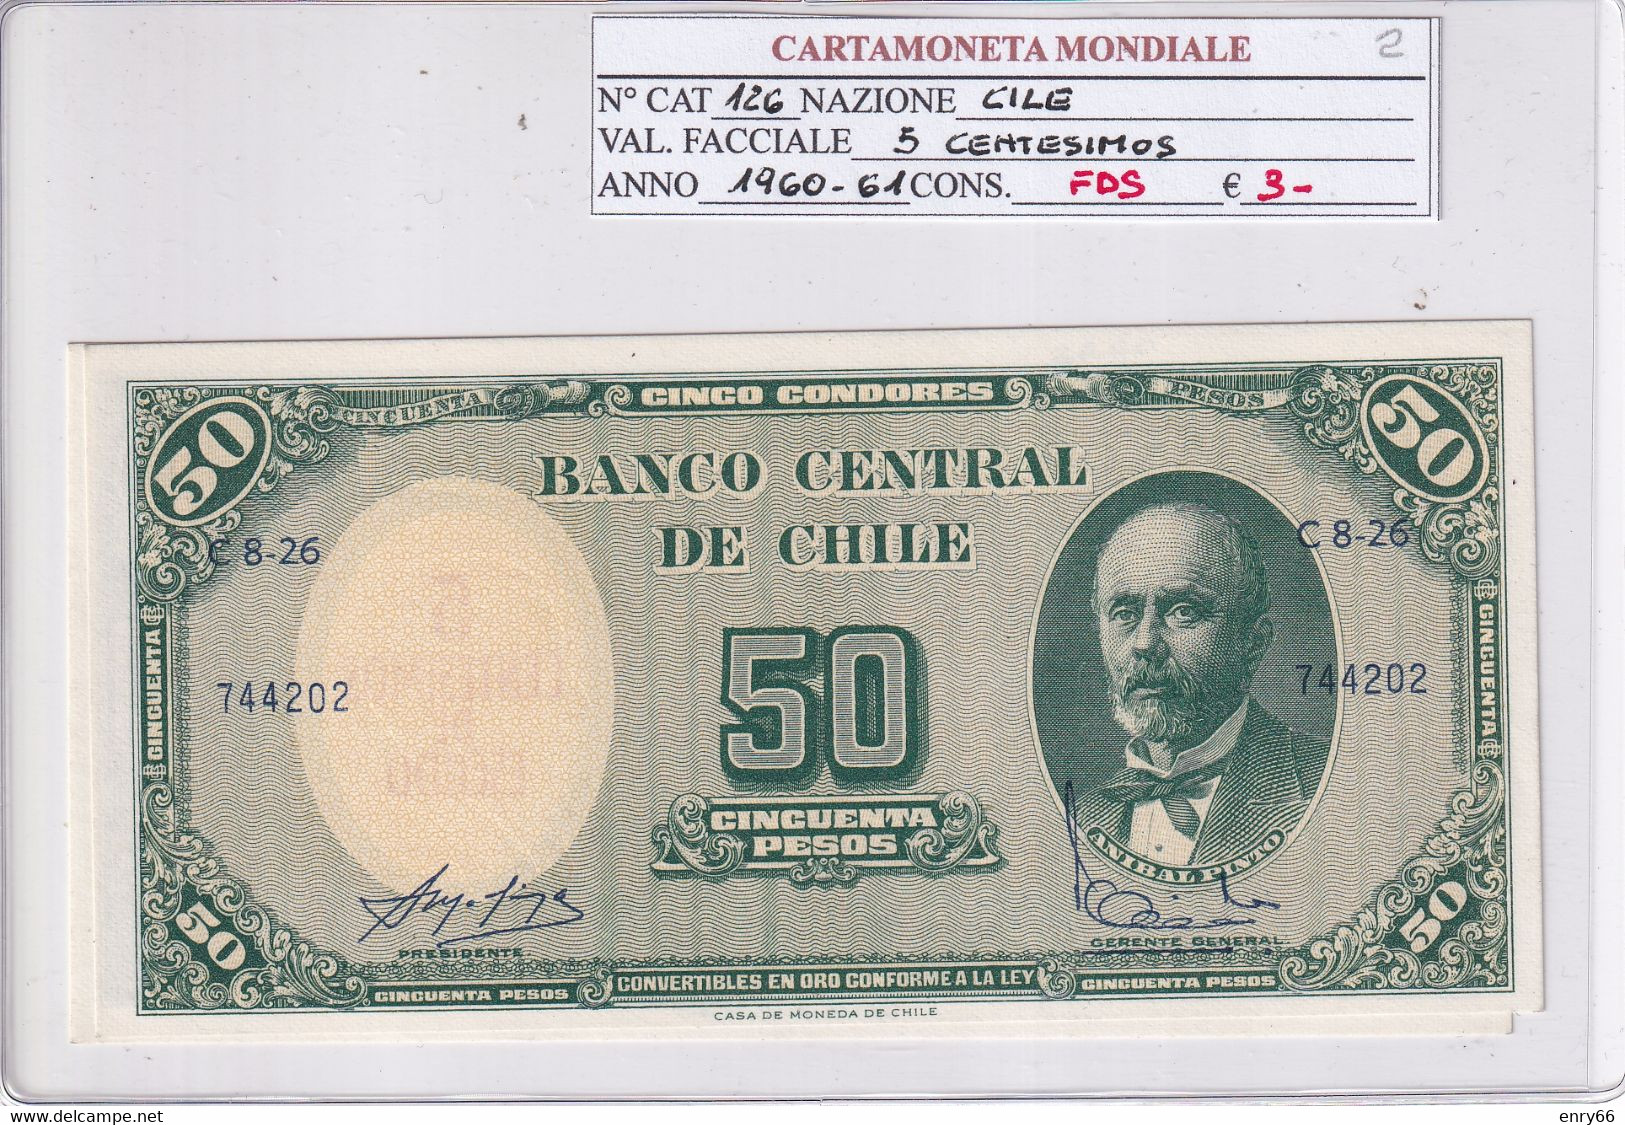 CILE 50 PESOS 1960-61 P126 - Chile